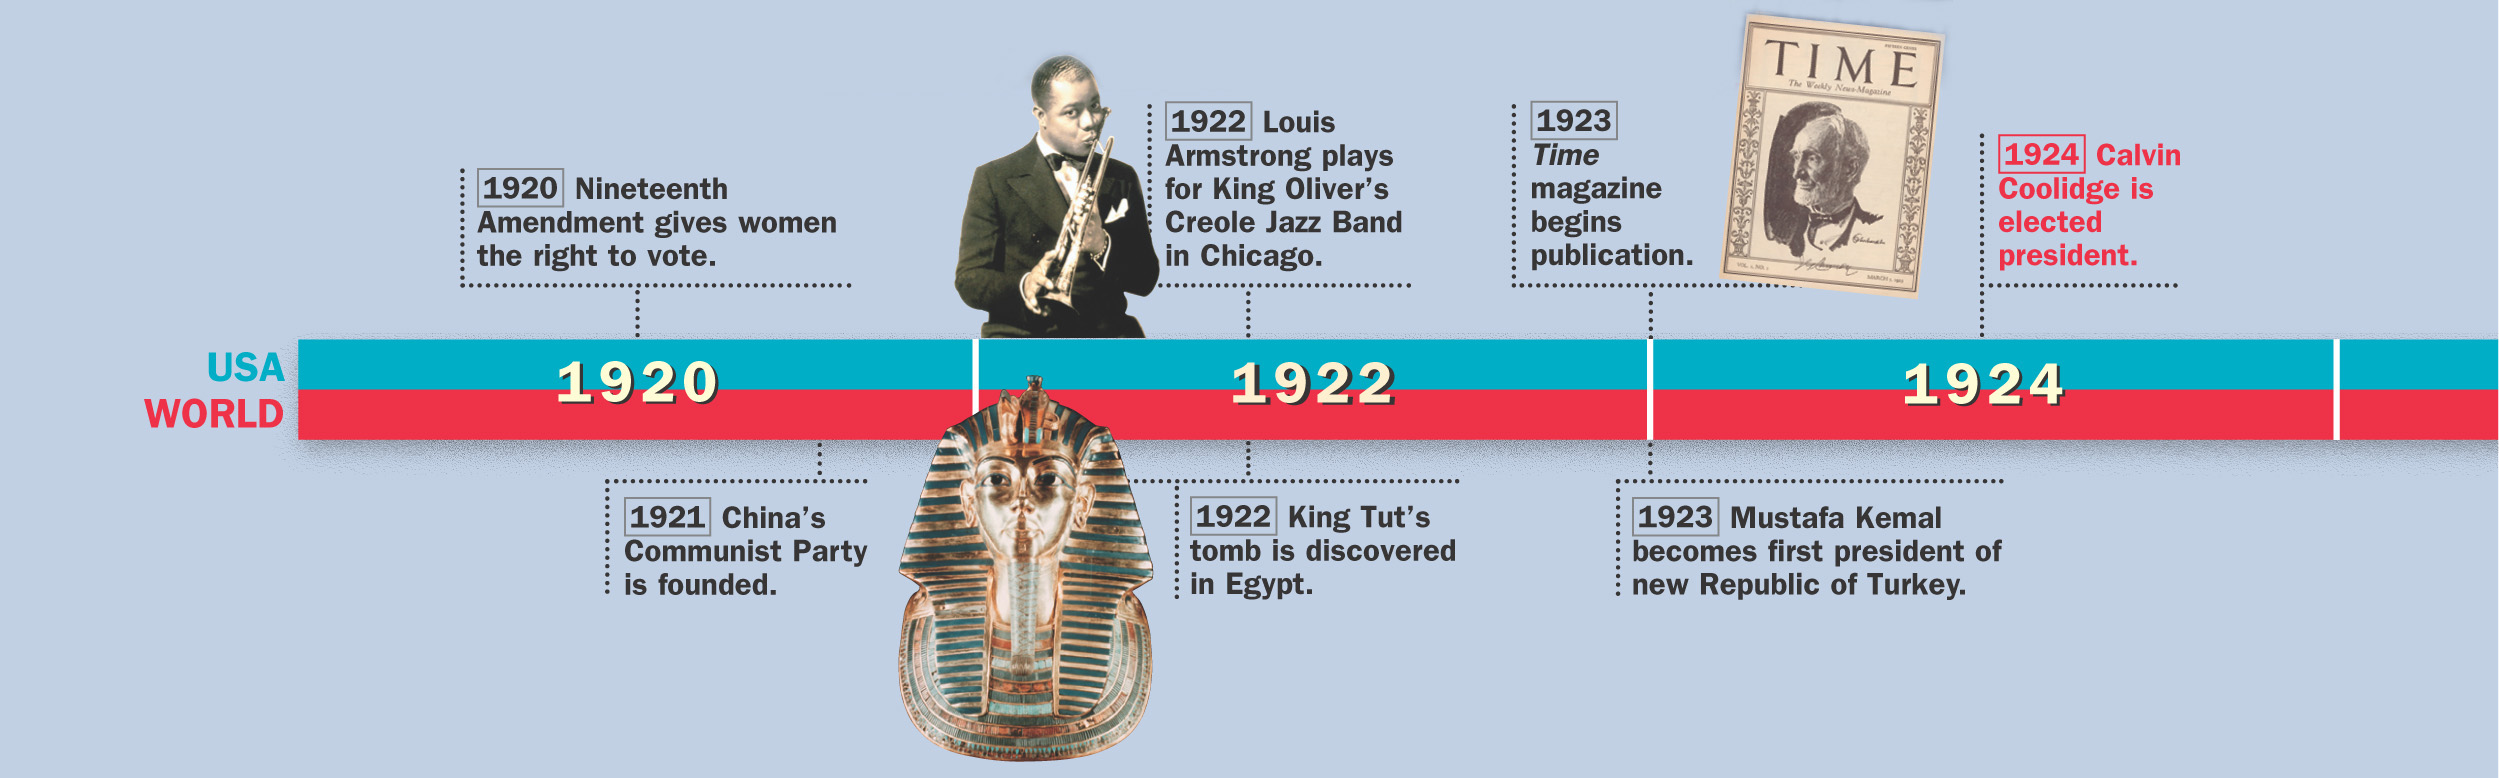 Timeline: 1920 to 1924